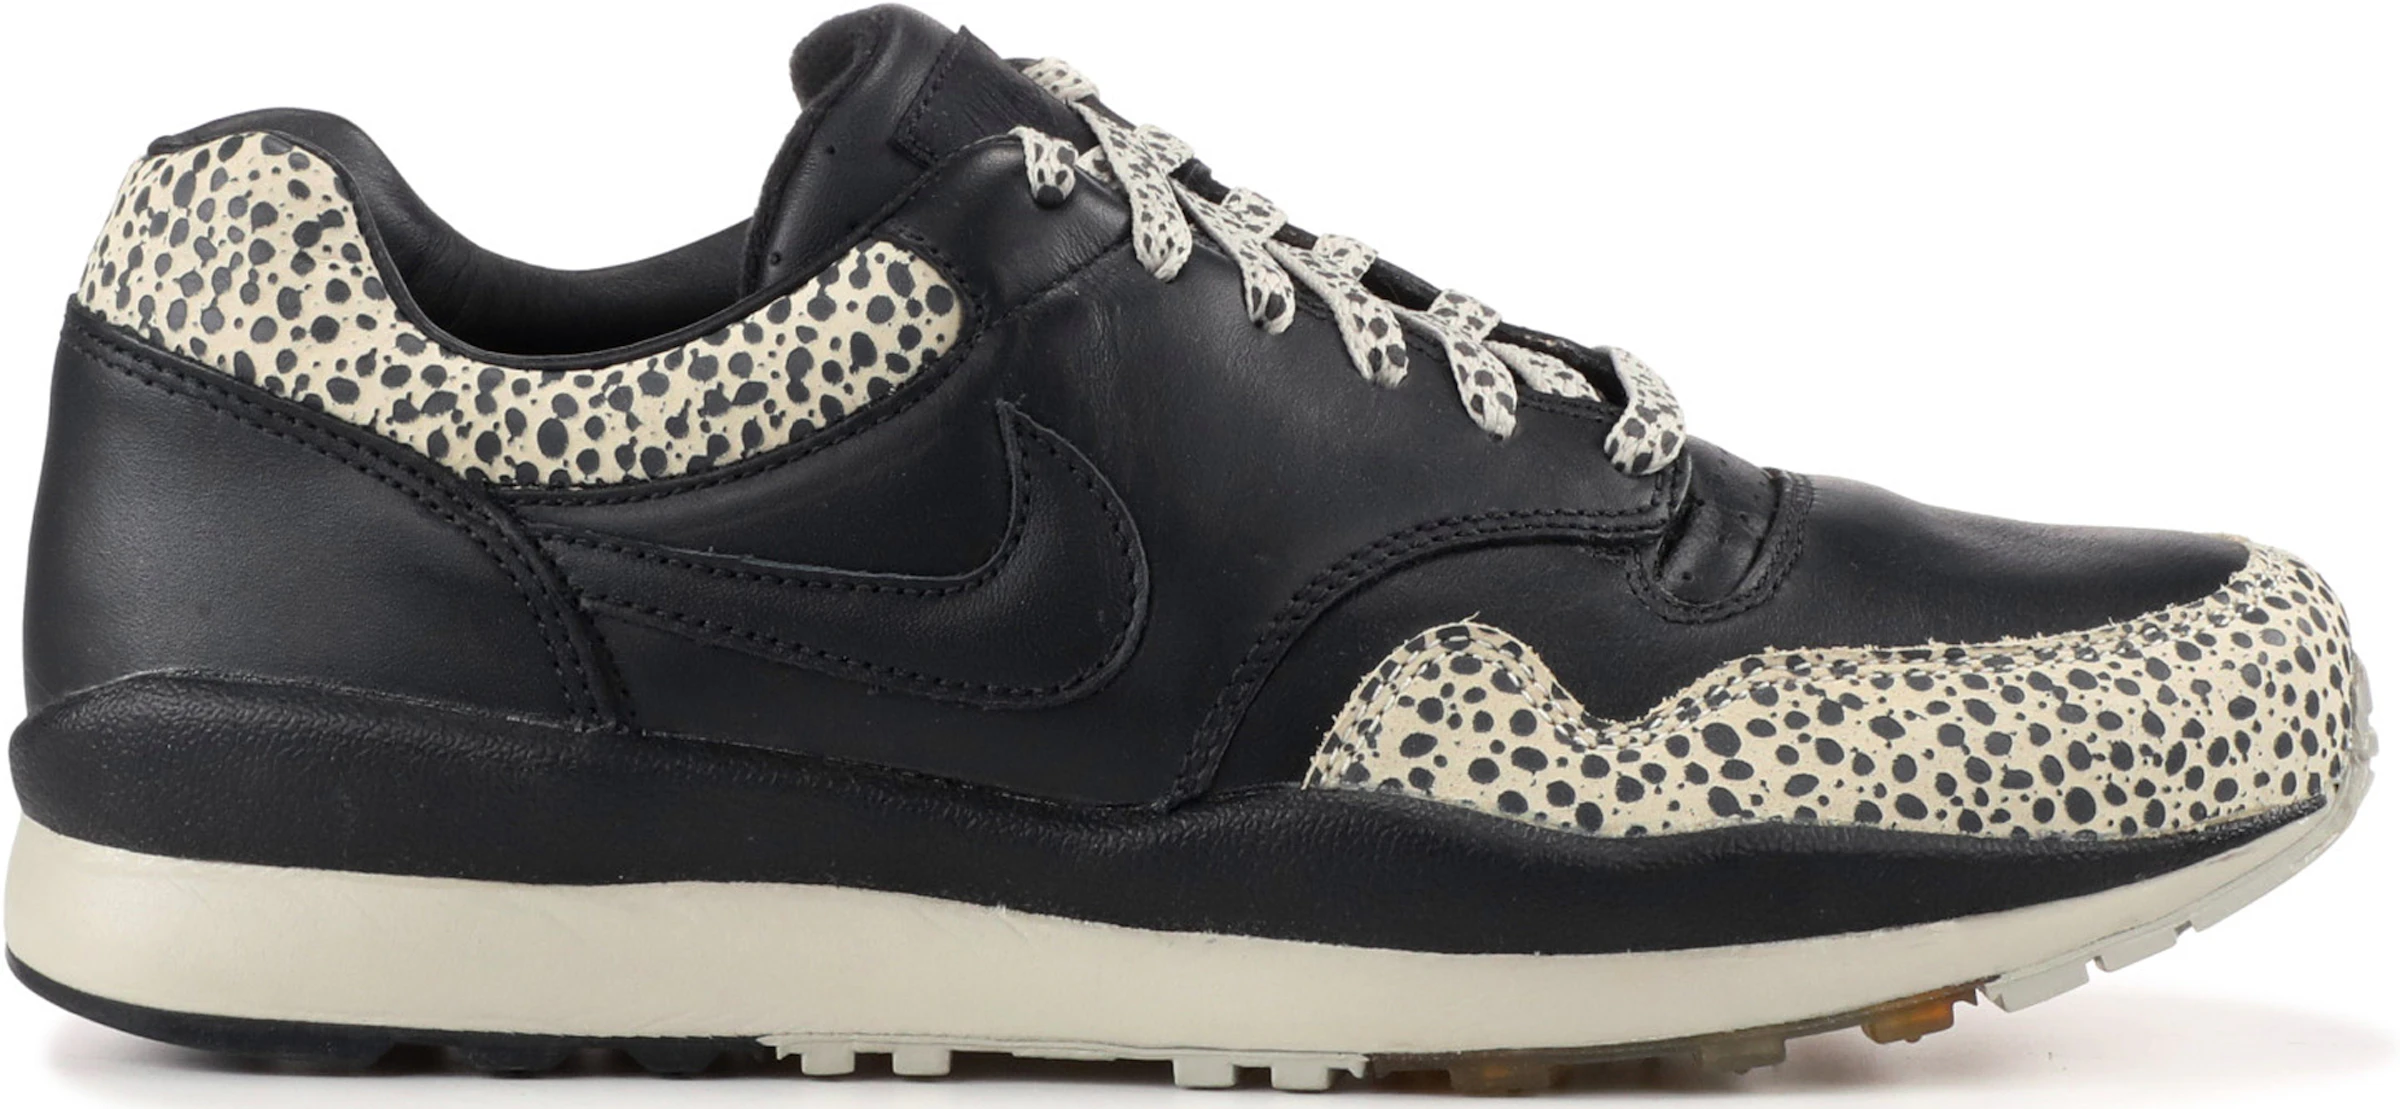 Nike Air Safari Black Leather - 543261-040 -